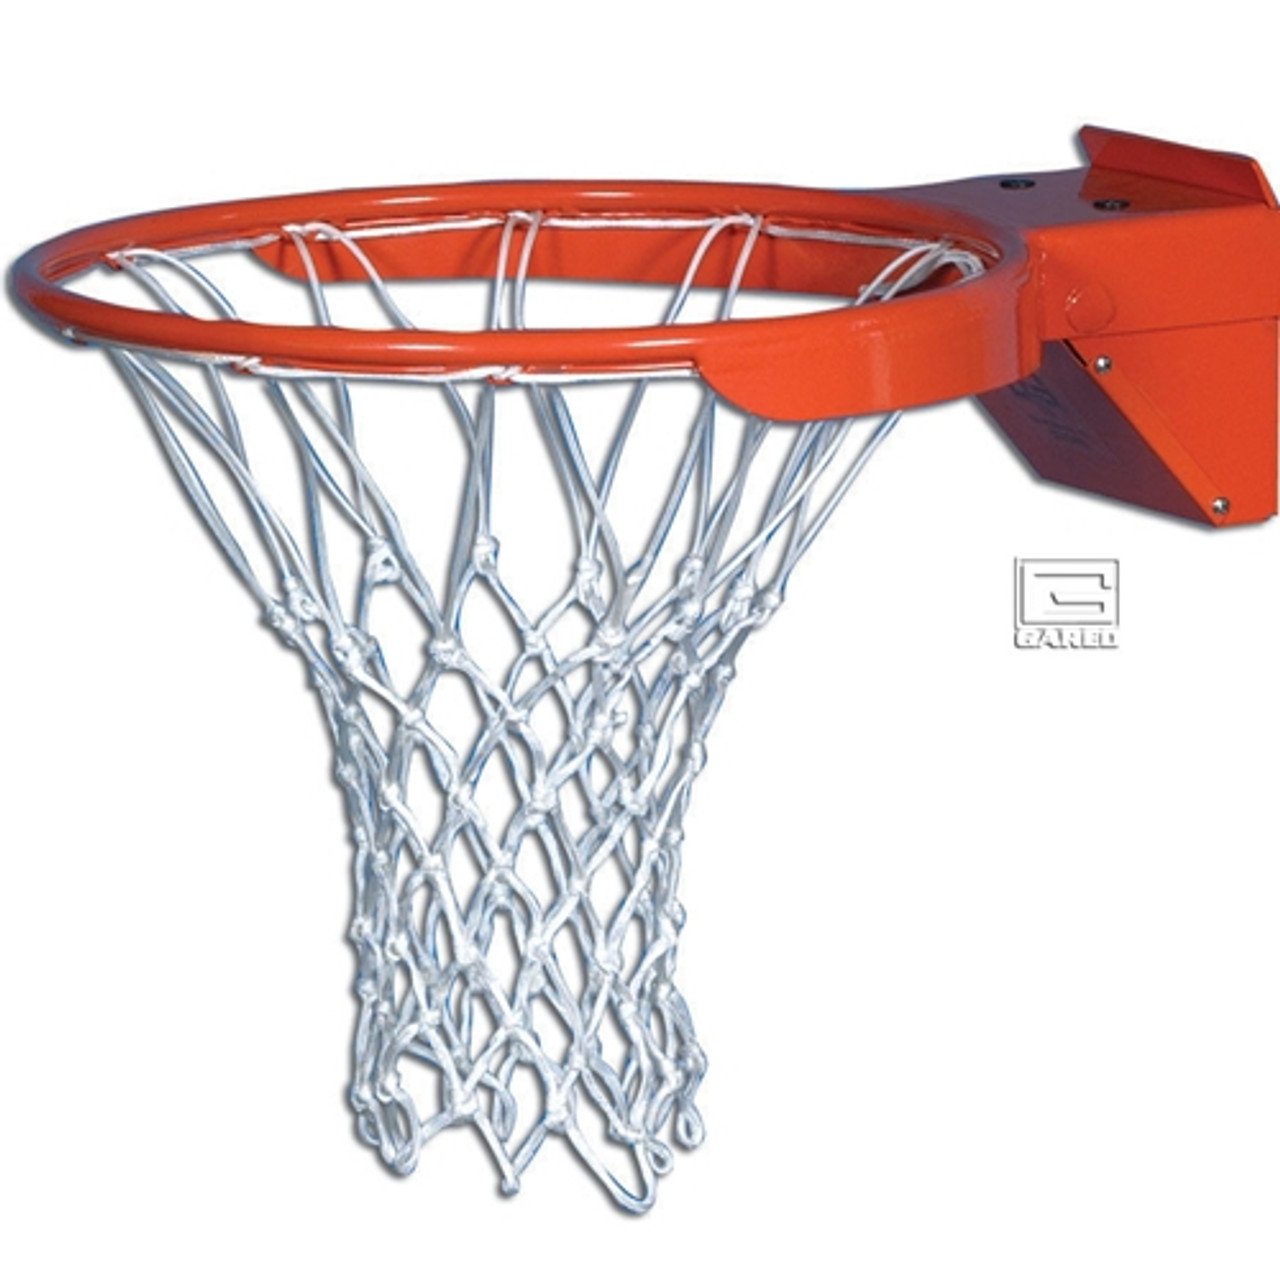 Gared NBA Snap Back Arena Rim for Glass Backboards - AchillionSports